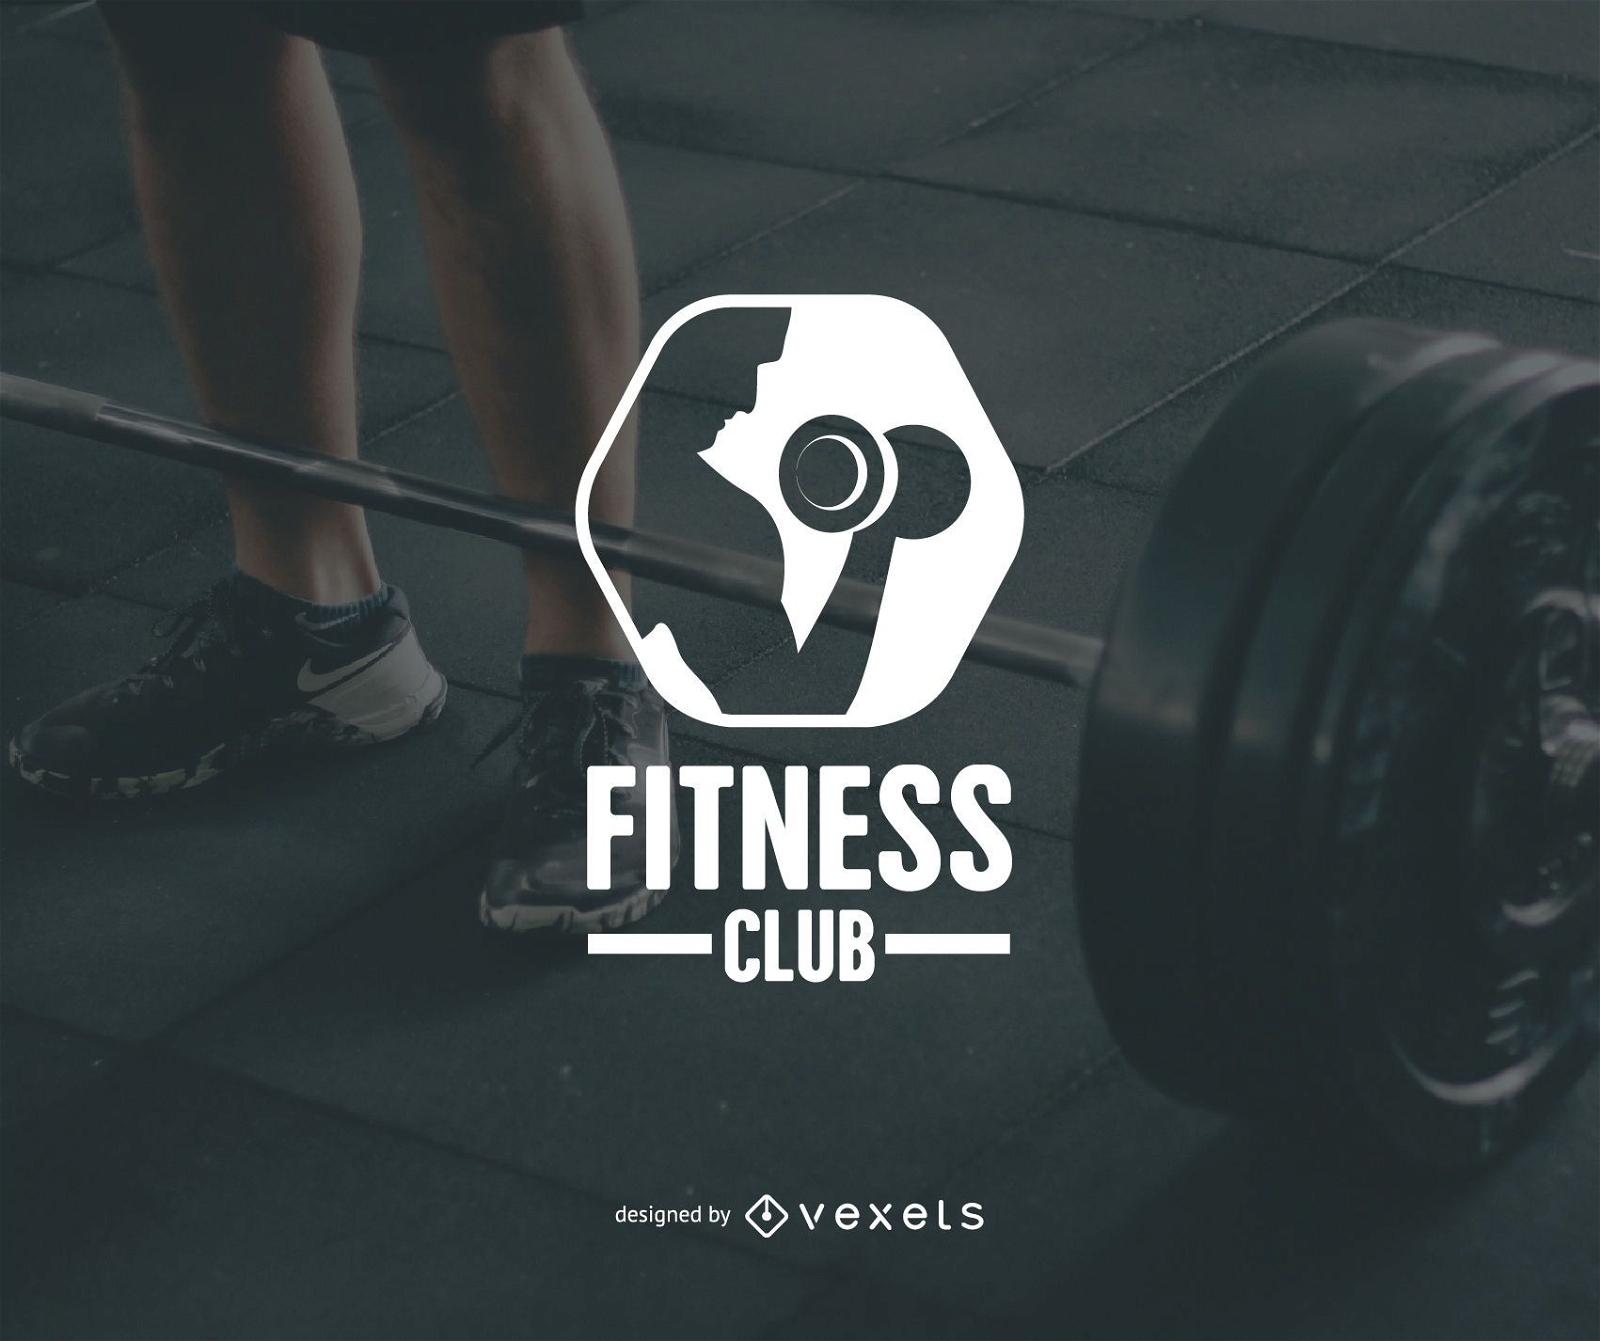 Fitness club logo template